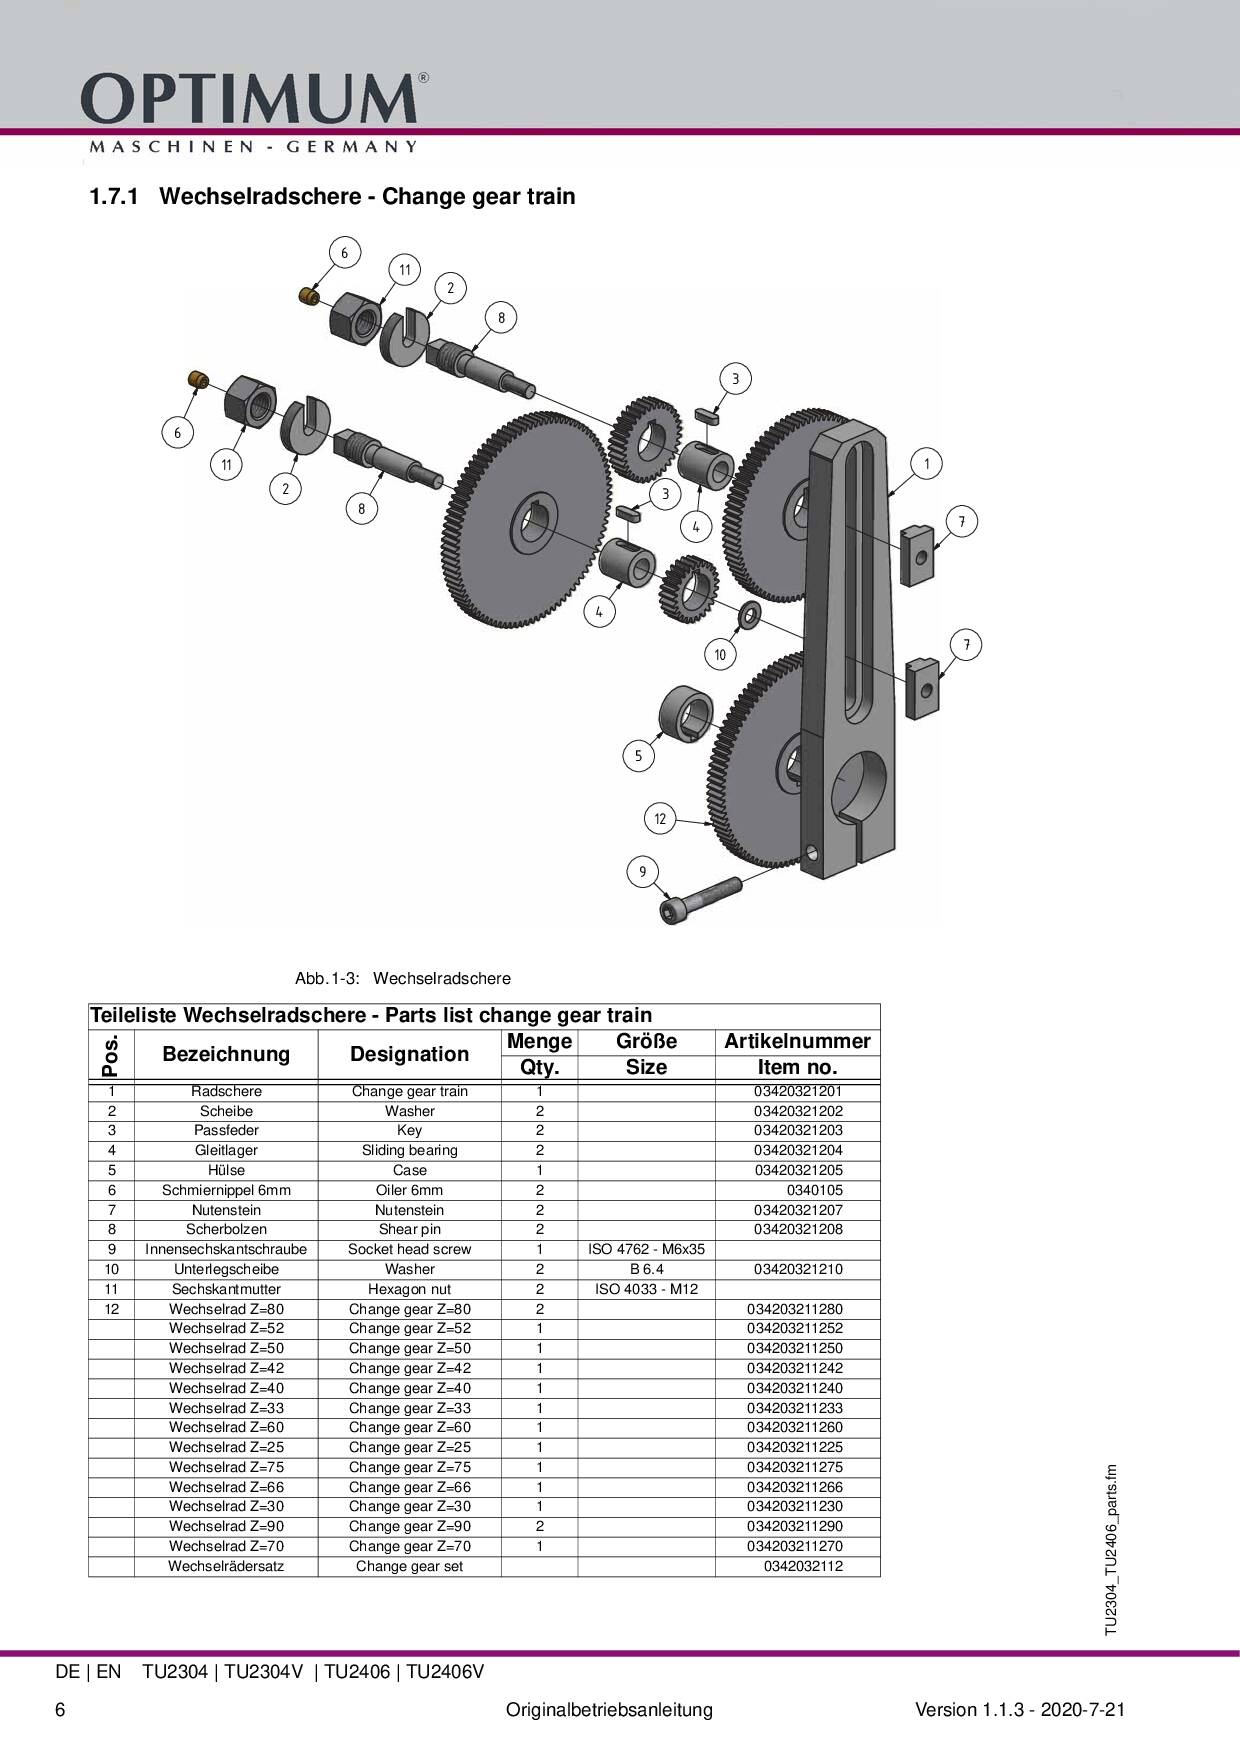 Tour à métaux Optimum TU 2304 - Optimachines